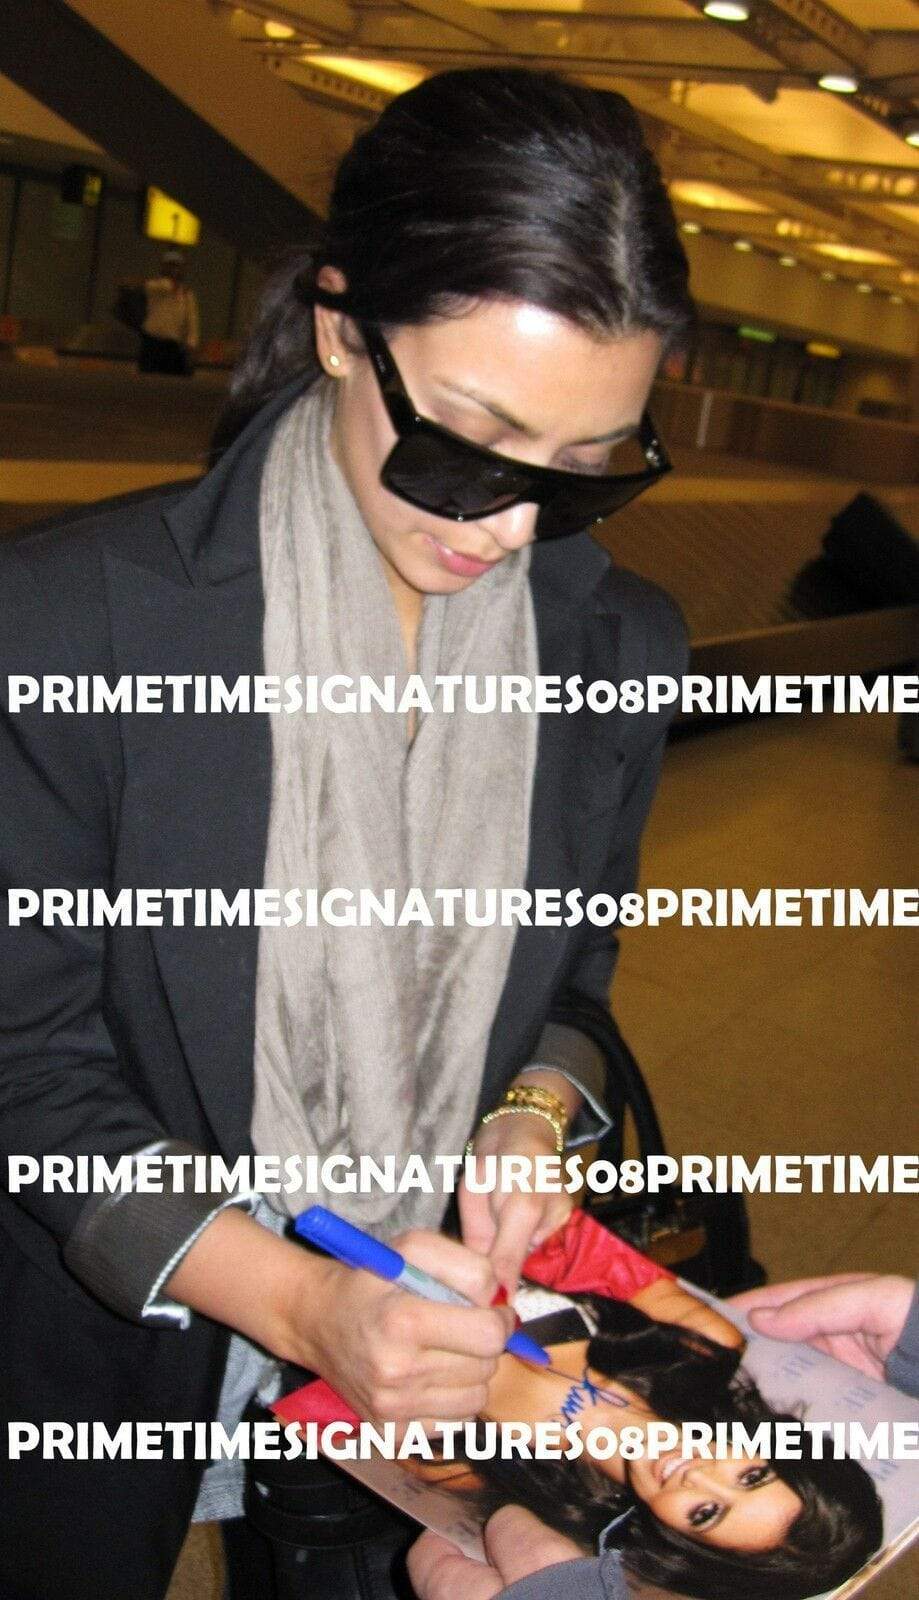 Kim Kardashian Authentic Autographed 8x10 Photo - Prime Time Signatures - Personality